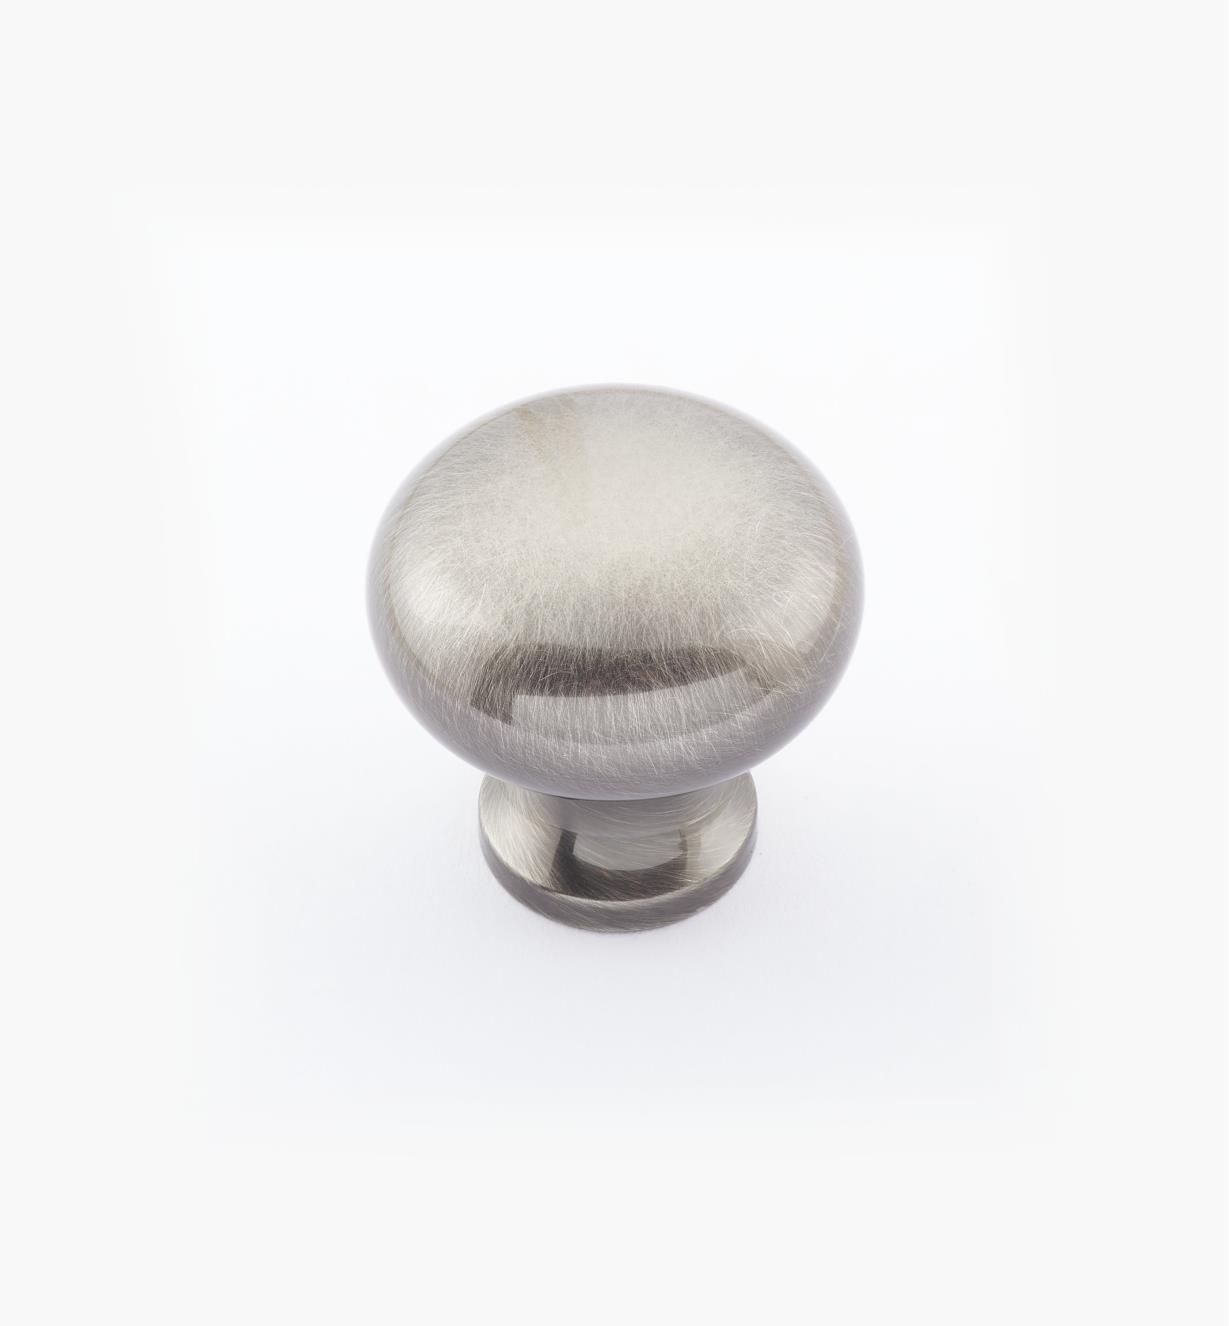 02W1433 - Bouton bombé en laiton de 1 po × 1 po, fini nickel antique